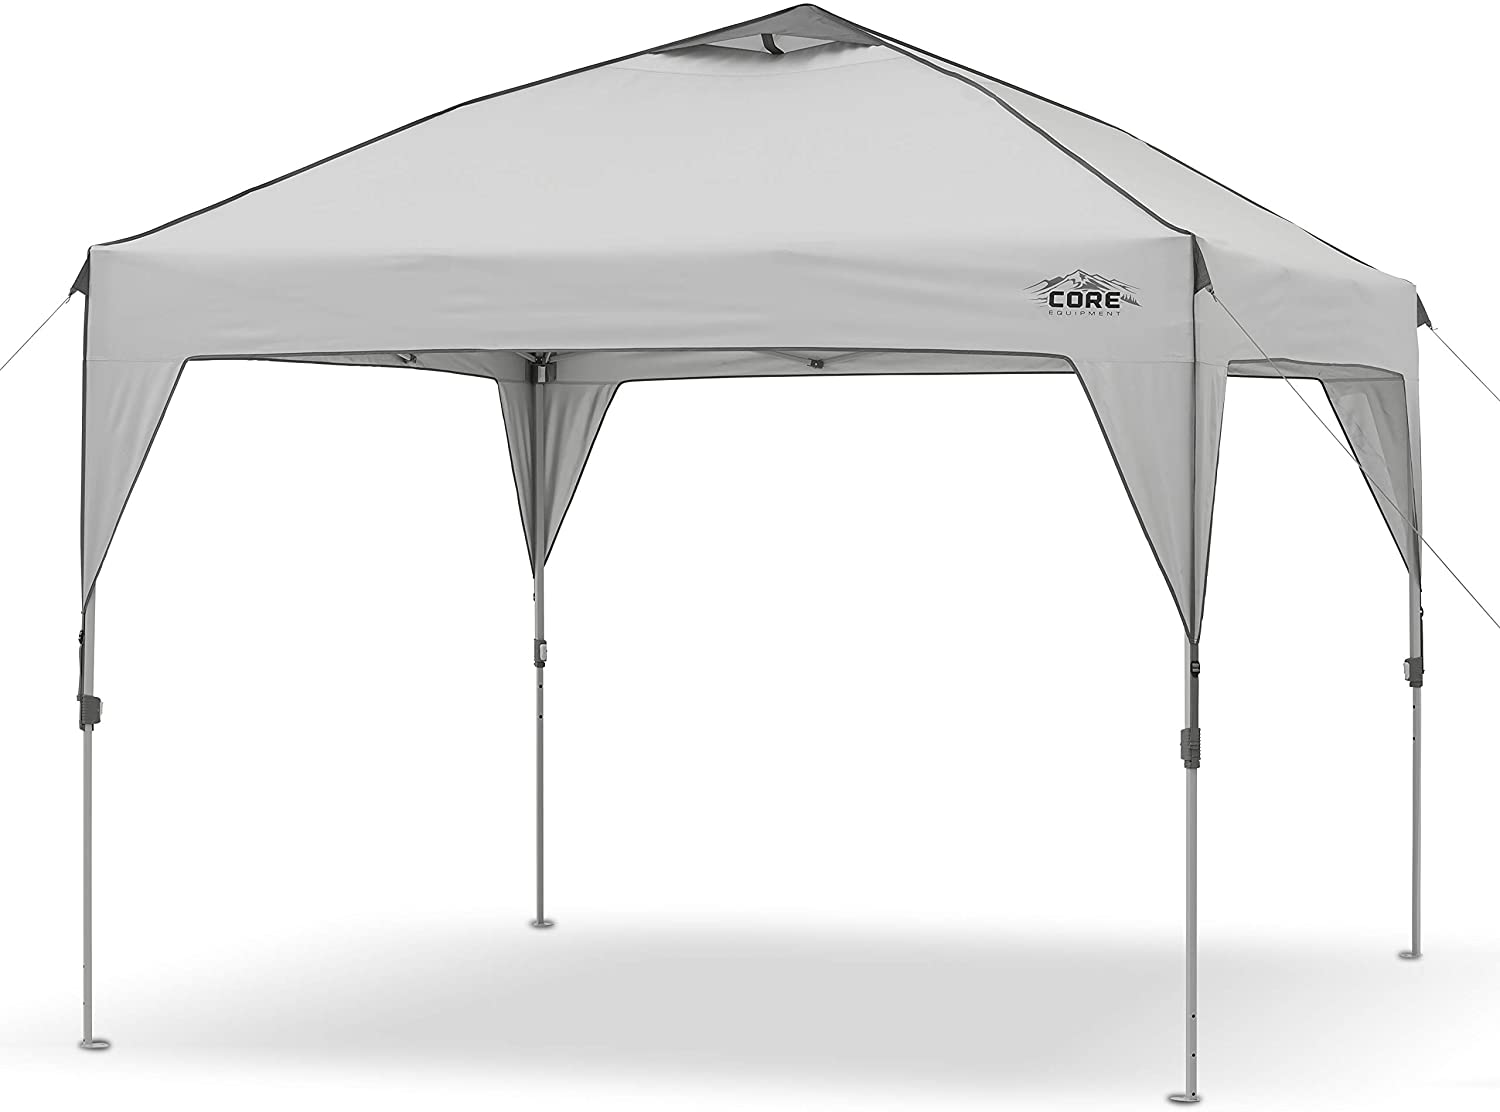 Core Alloy Steel Pop-Up Canopy Tent, 10×10-Feet